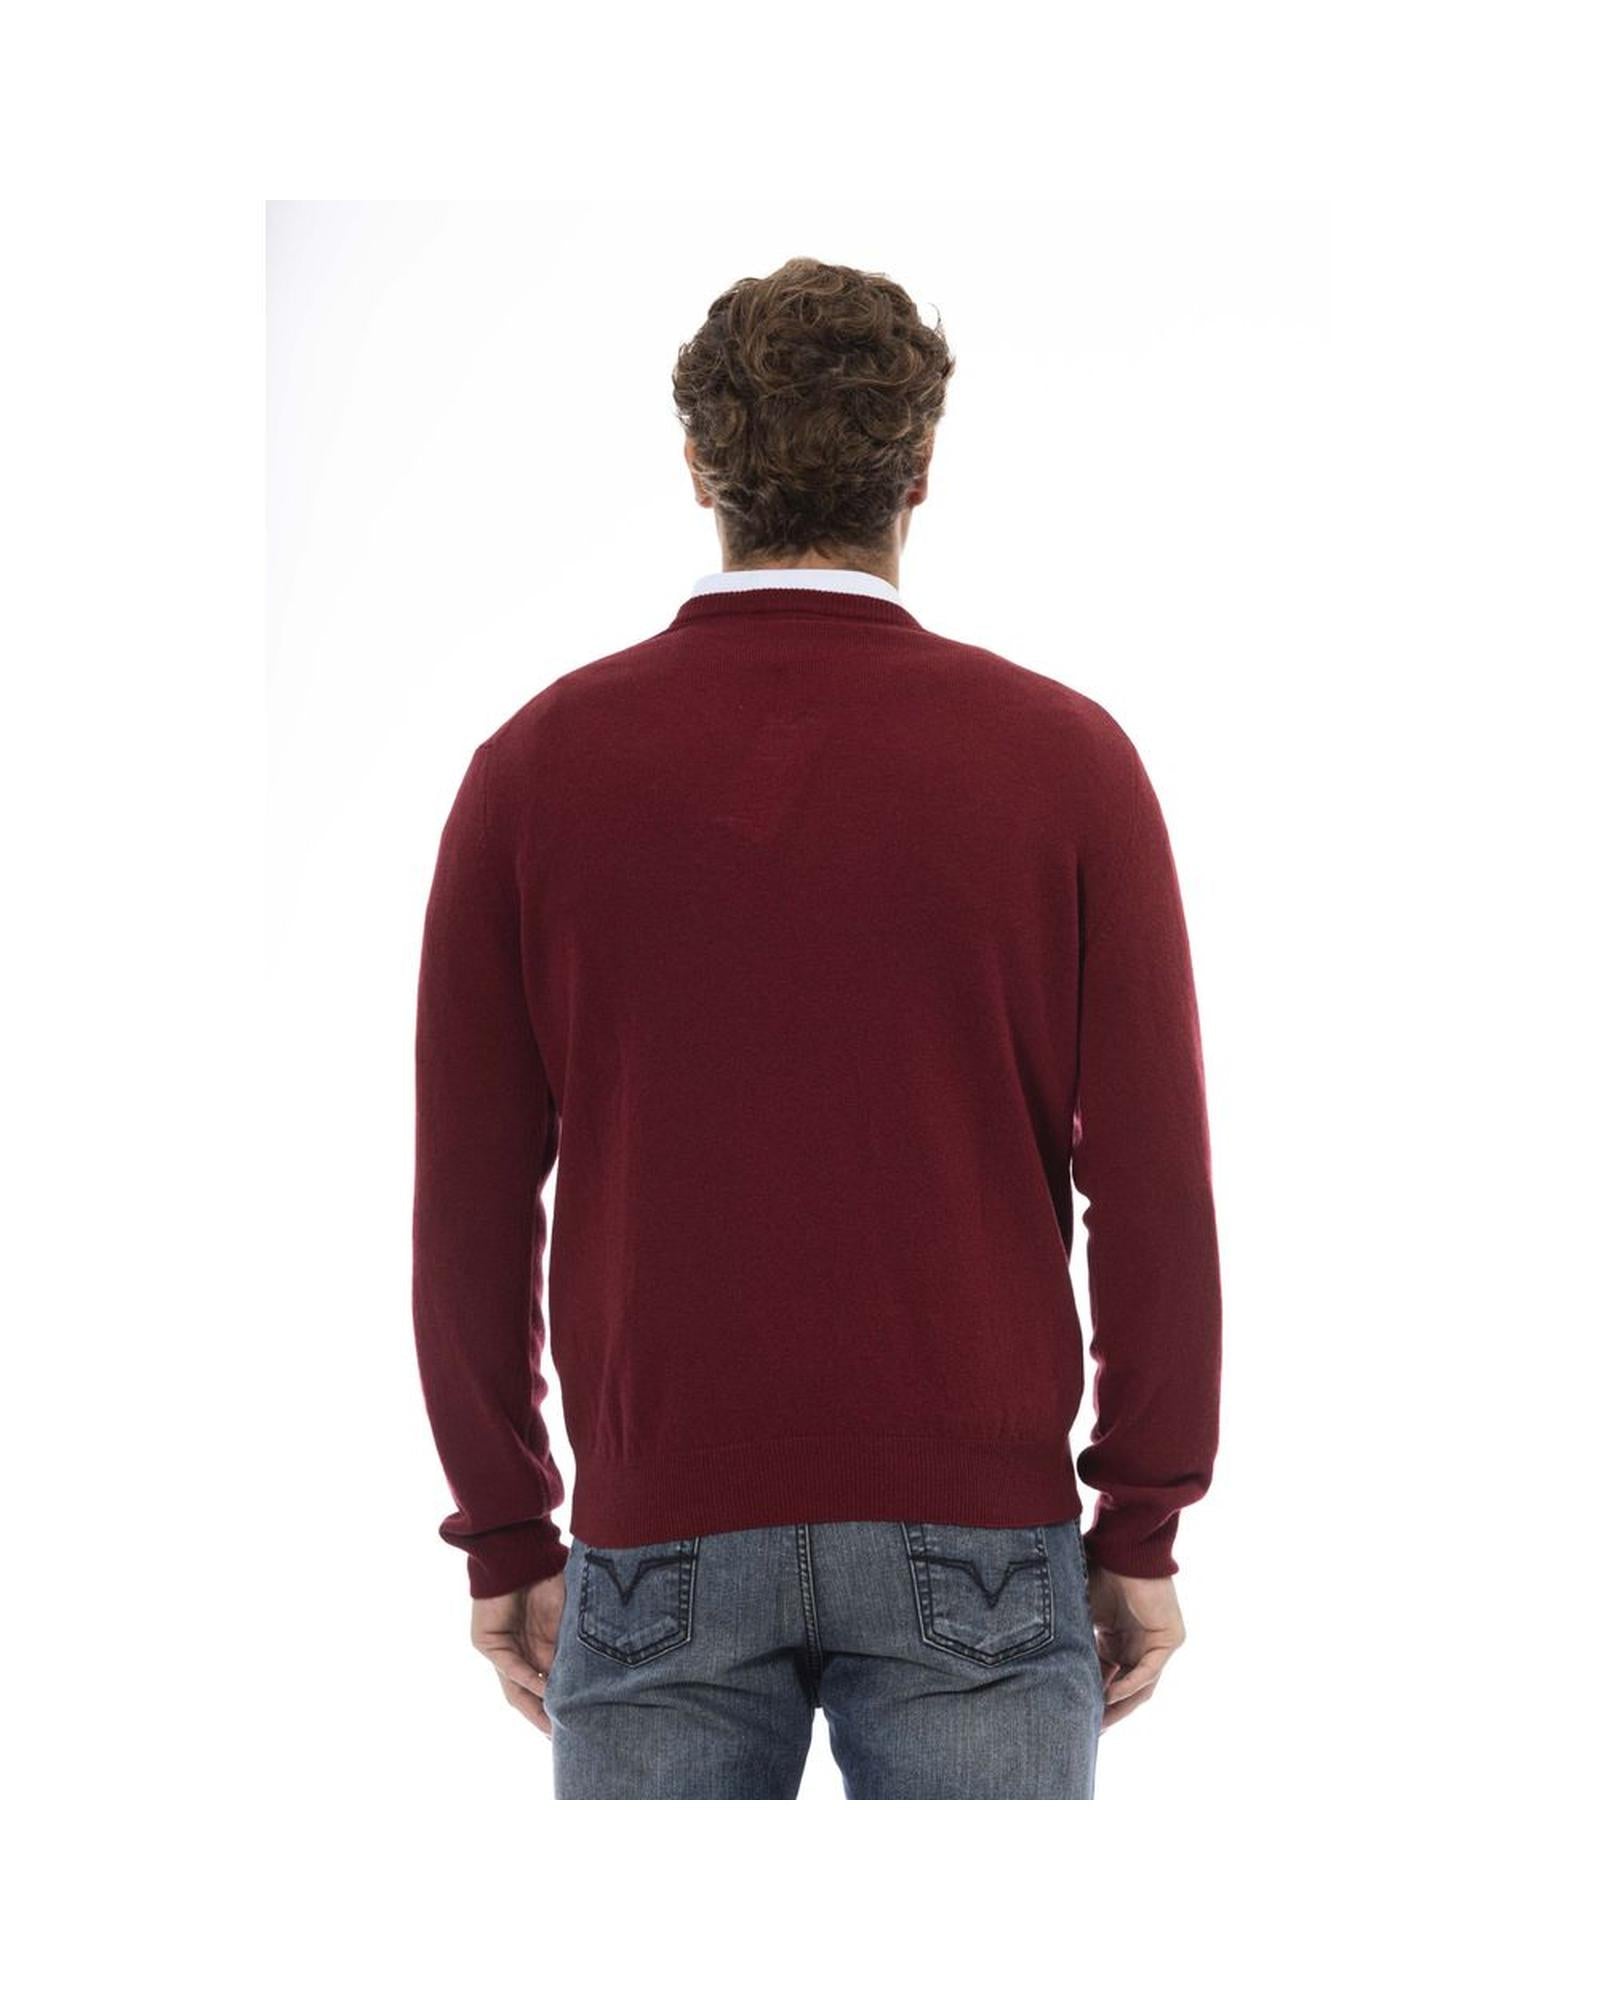 Men's Burgundy Wool Sweater - M